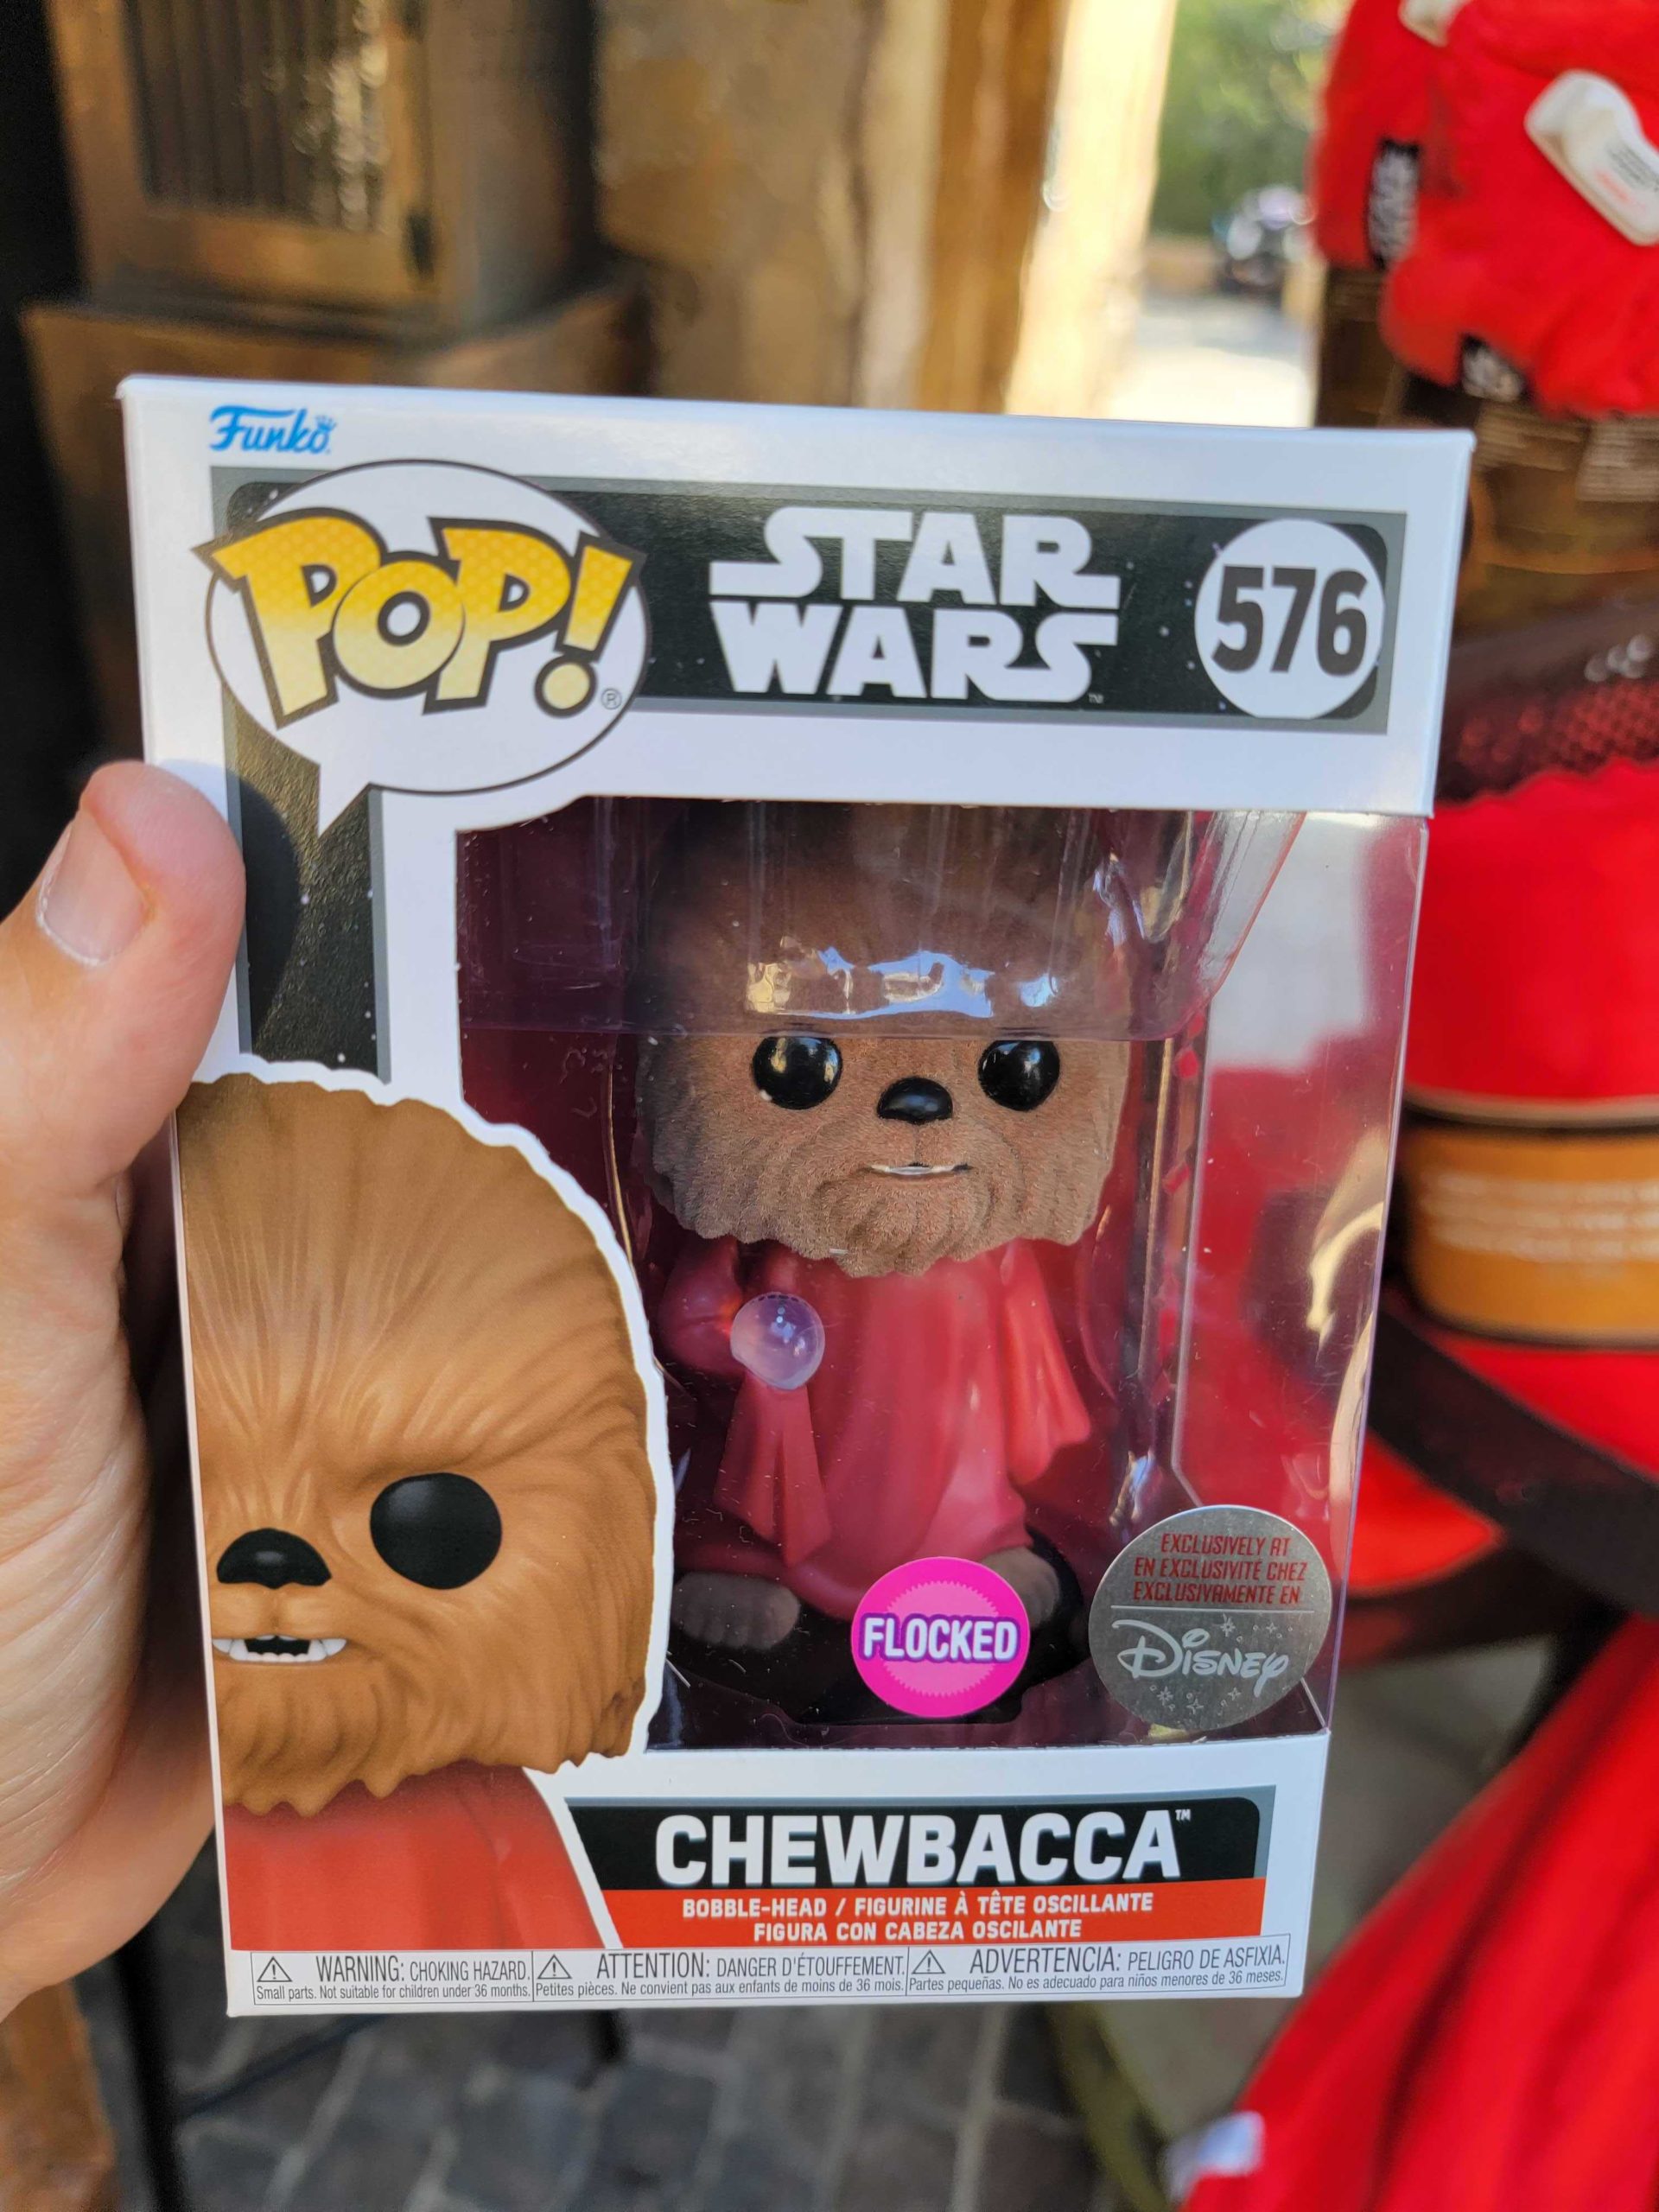 Life Day star wars chewbacca close